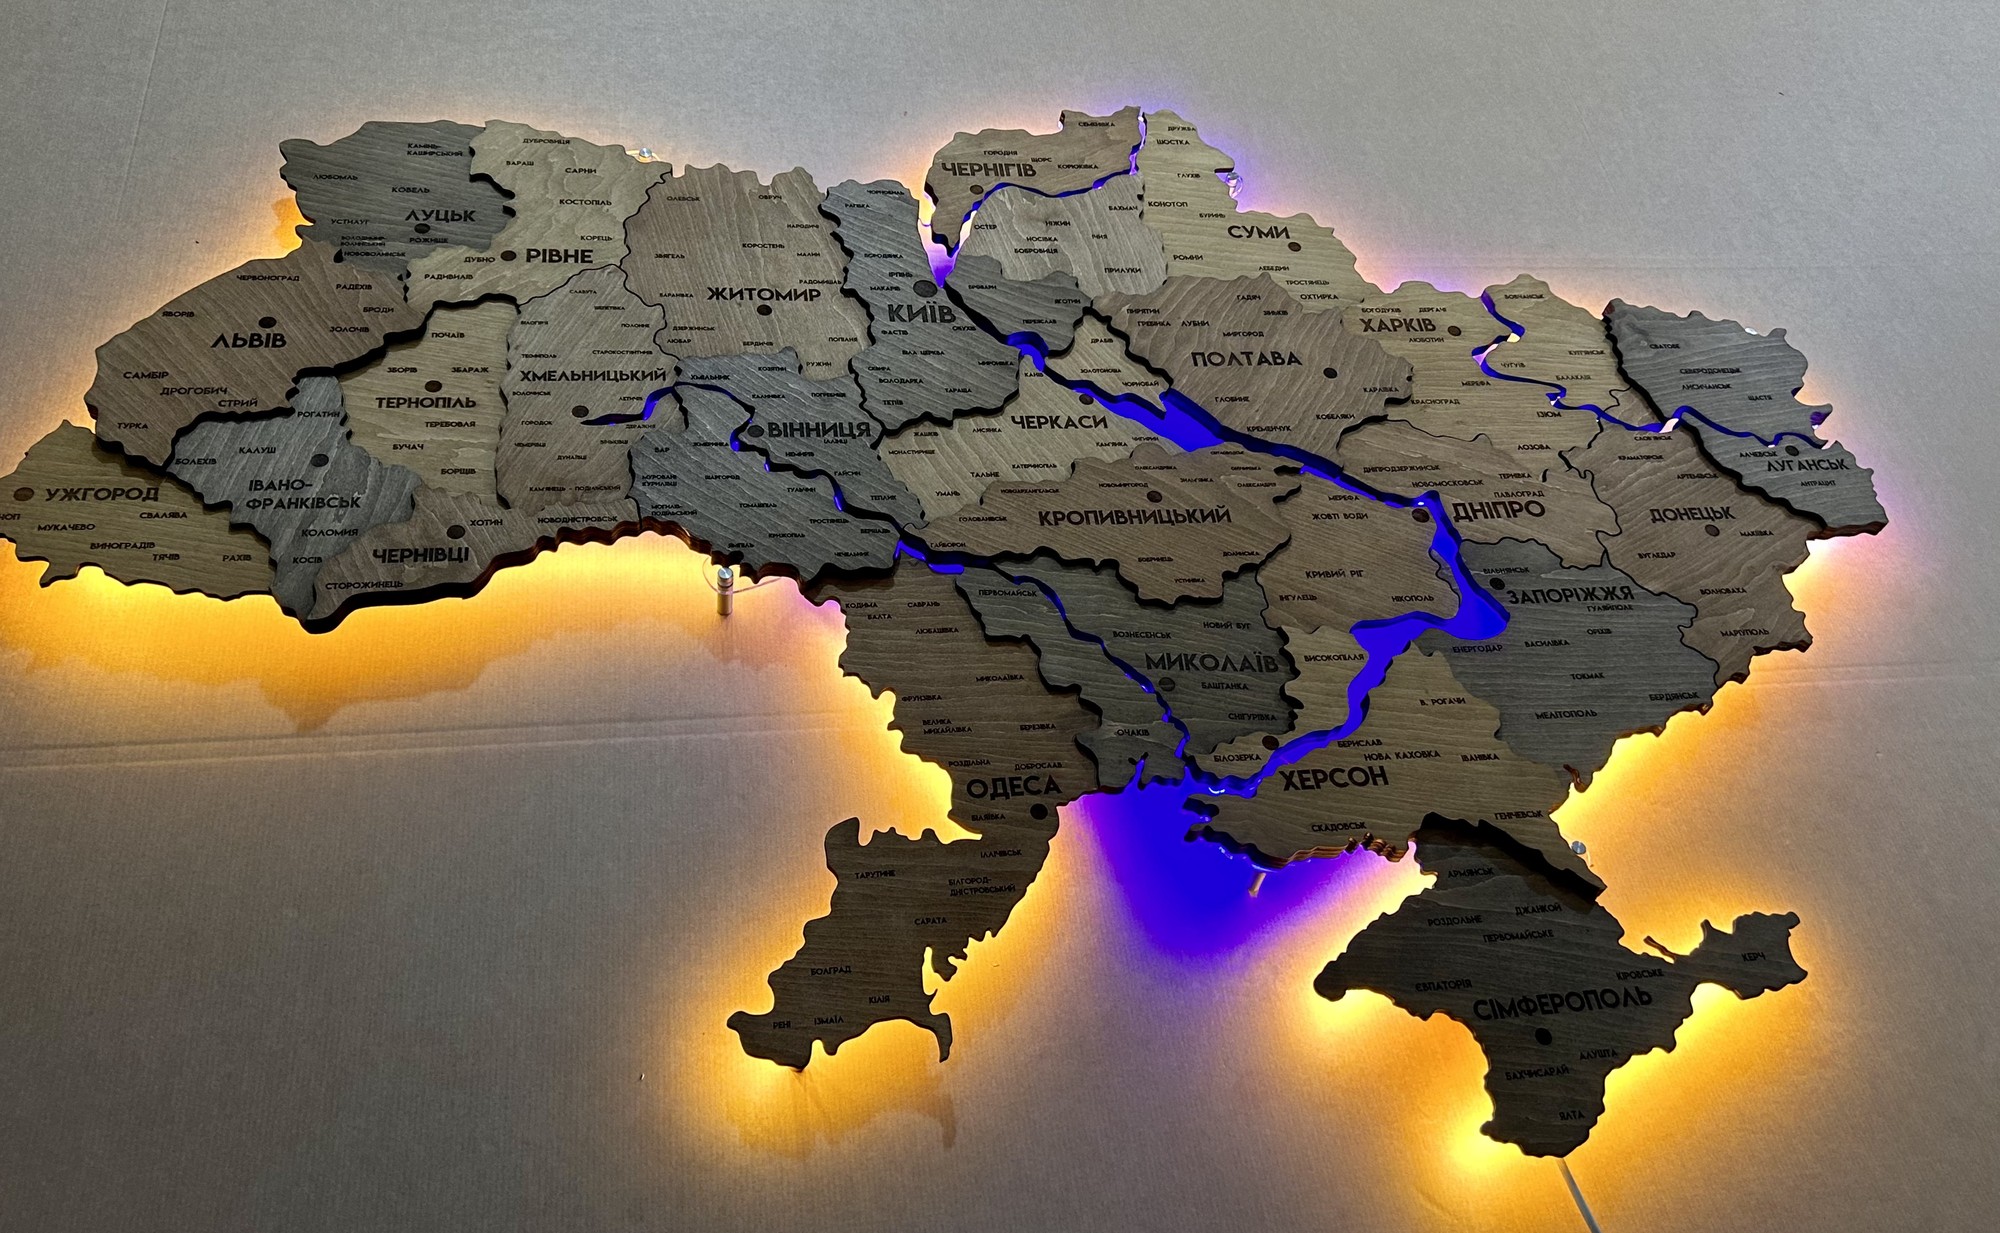 Detailed multilayer Ukraine LED map with backlighting of rivers color Helsinki 200x133 cm (78.7*52.3 inch)